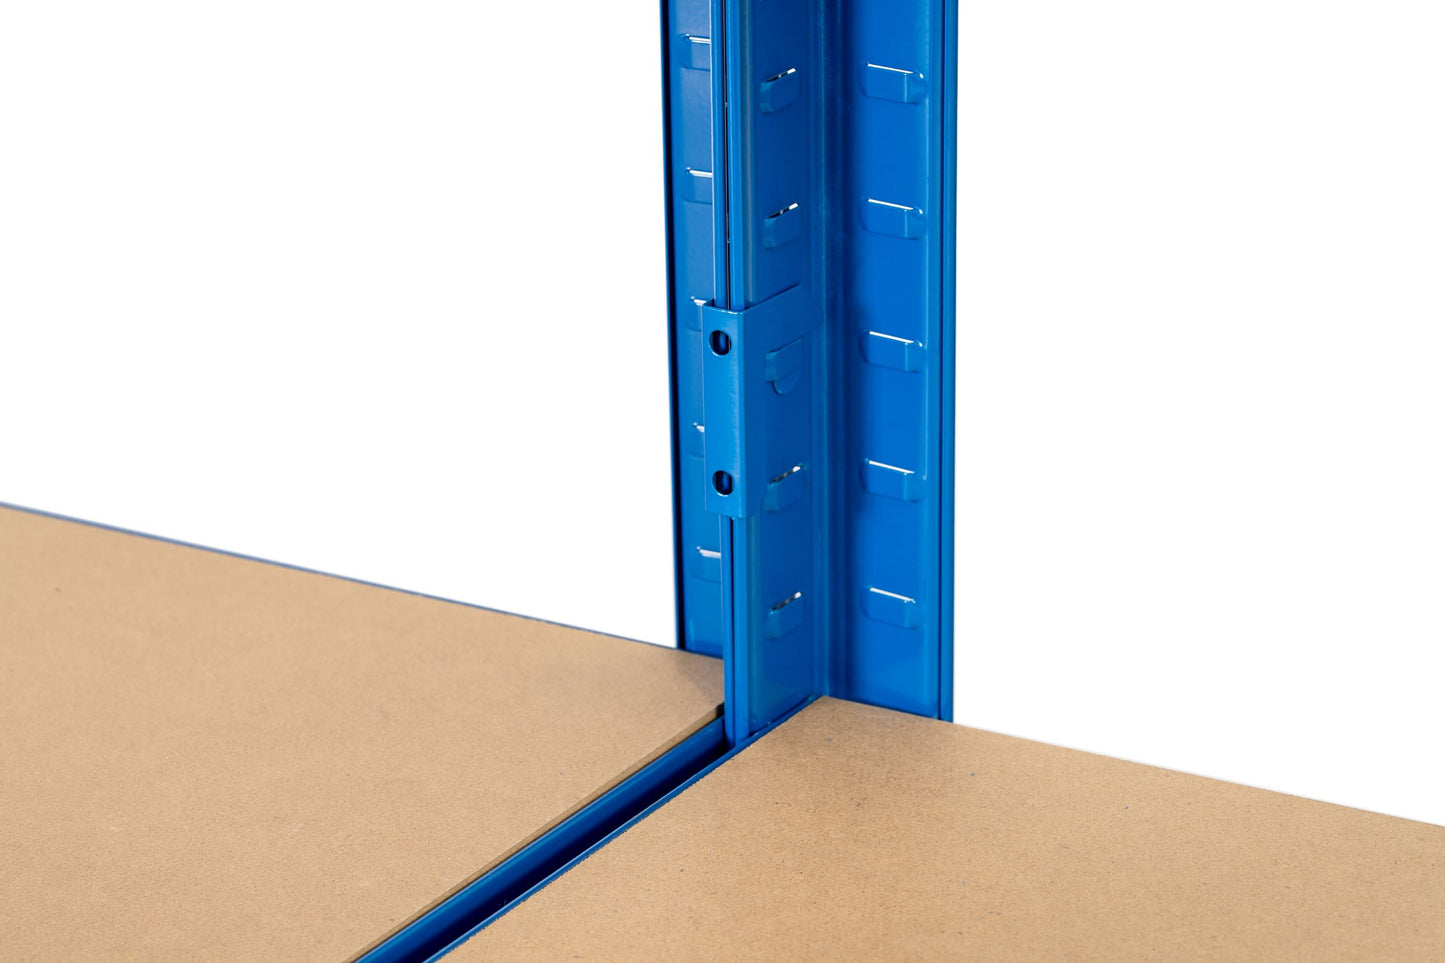 180 x 120 x 40cm | Blue | 5 Tier Boltless Heavy Duty Garage Shelving Unit | 1000kg Load Weight